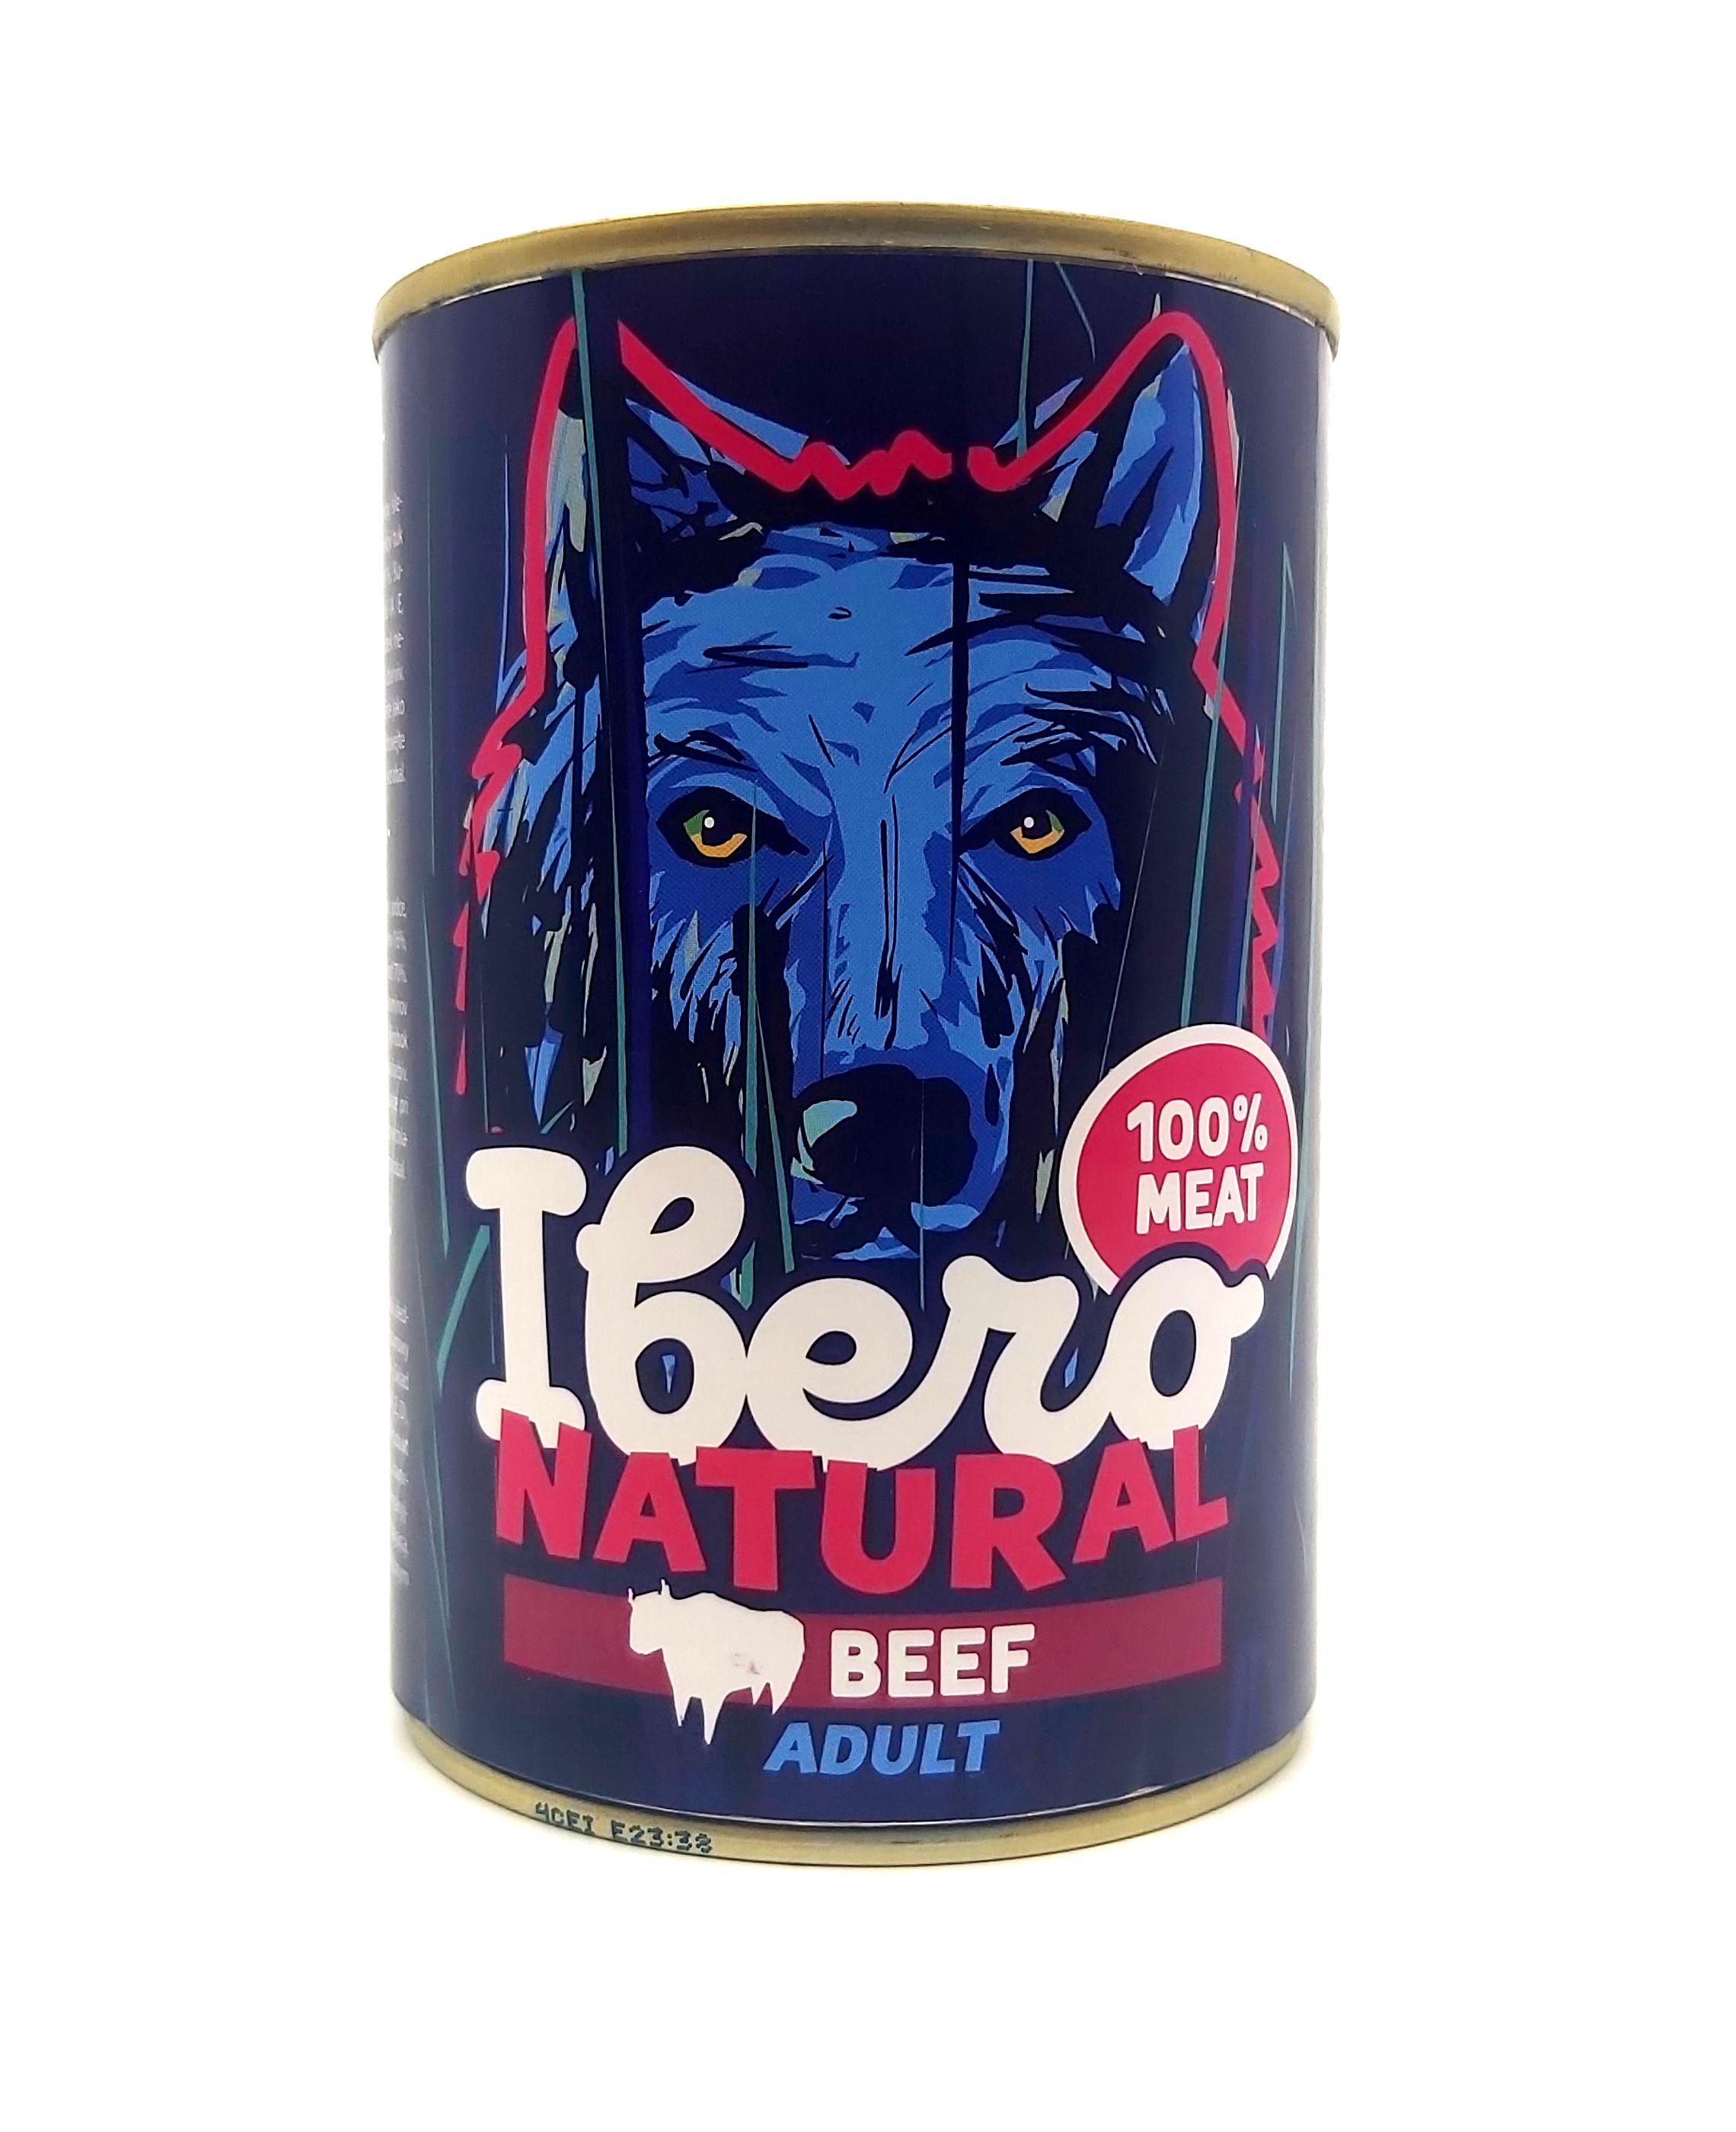 Ibero NATURAL dog konz. ADULT beef - 15x400g